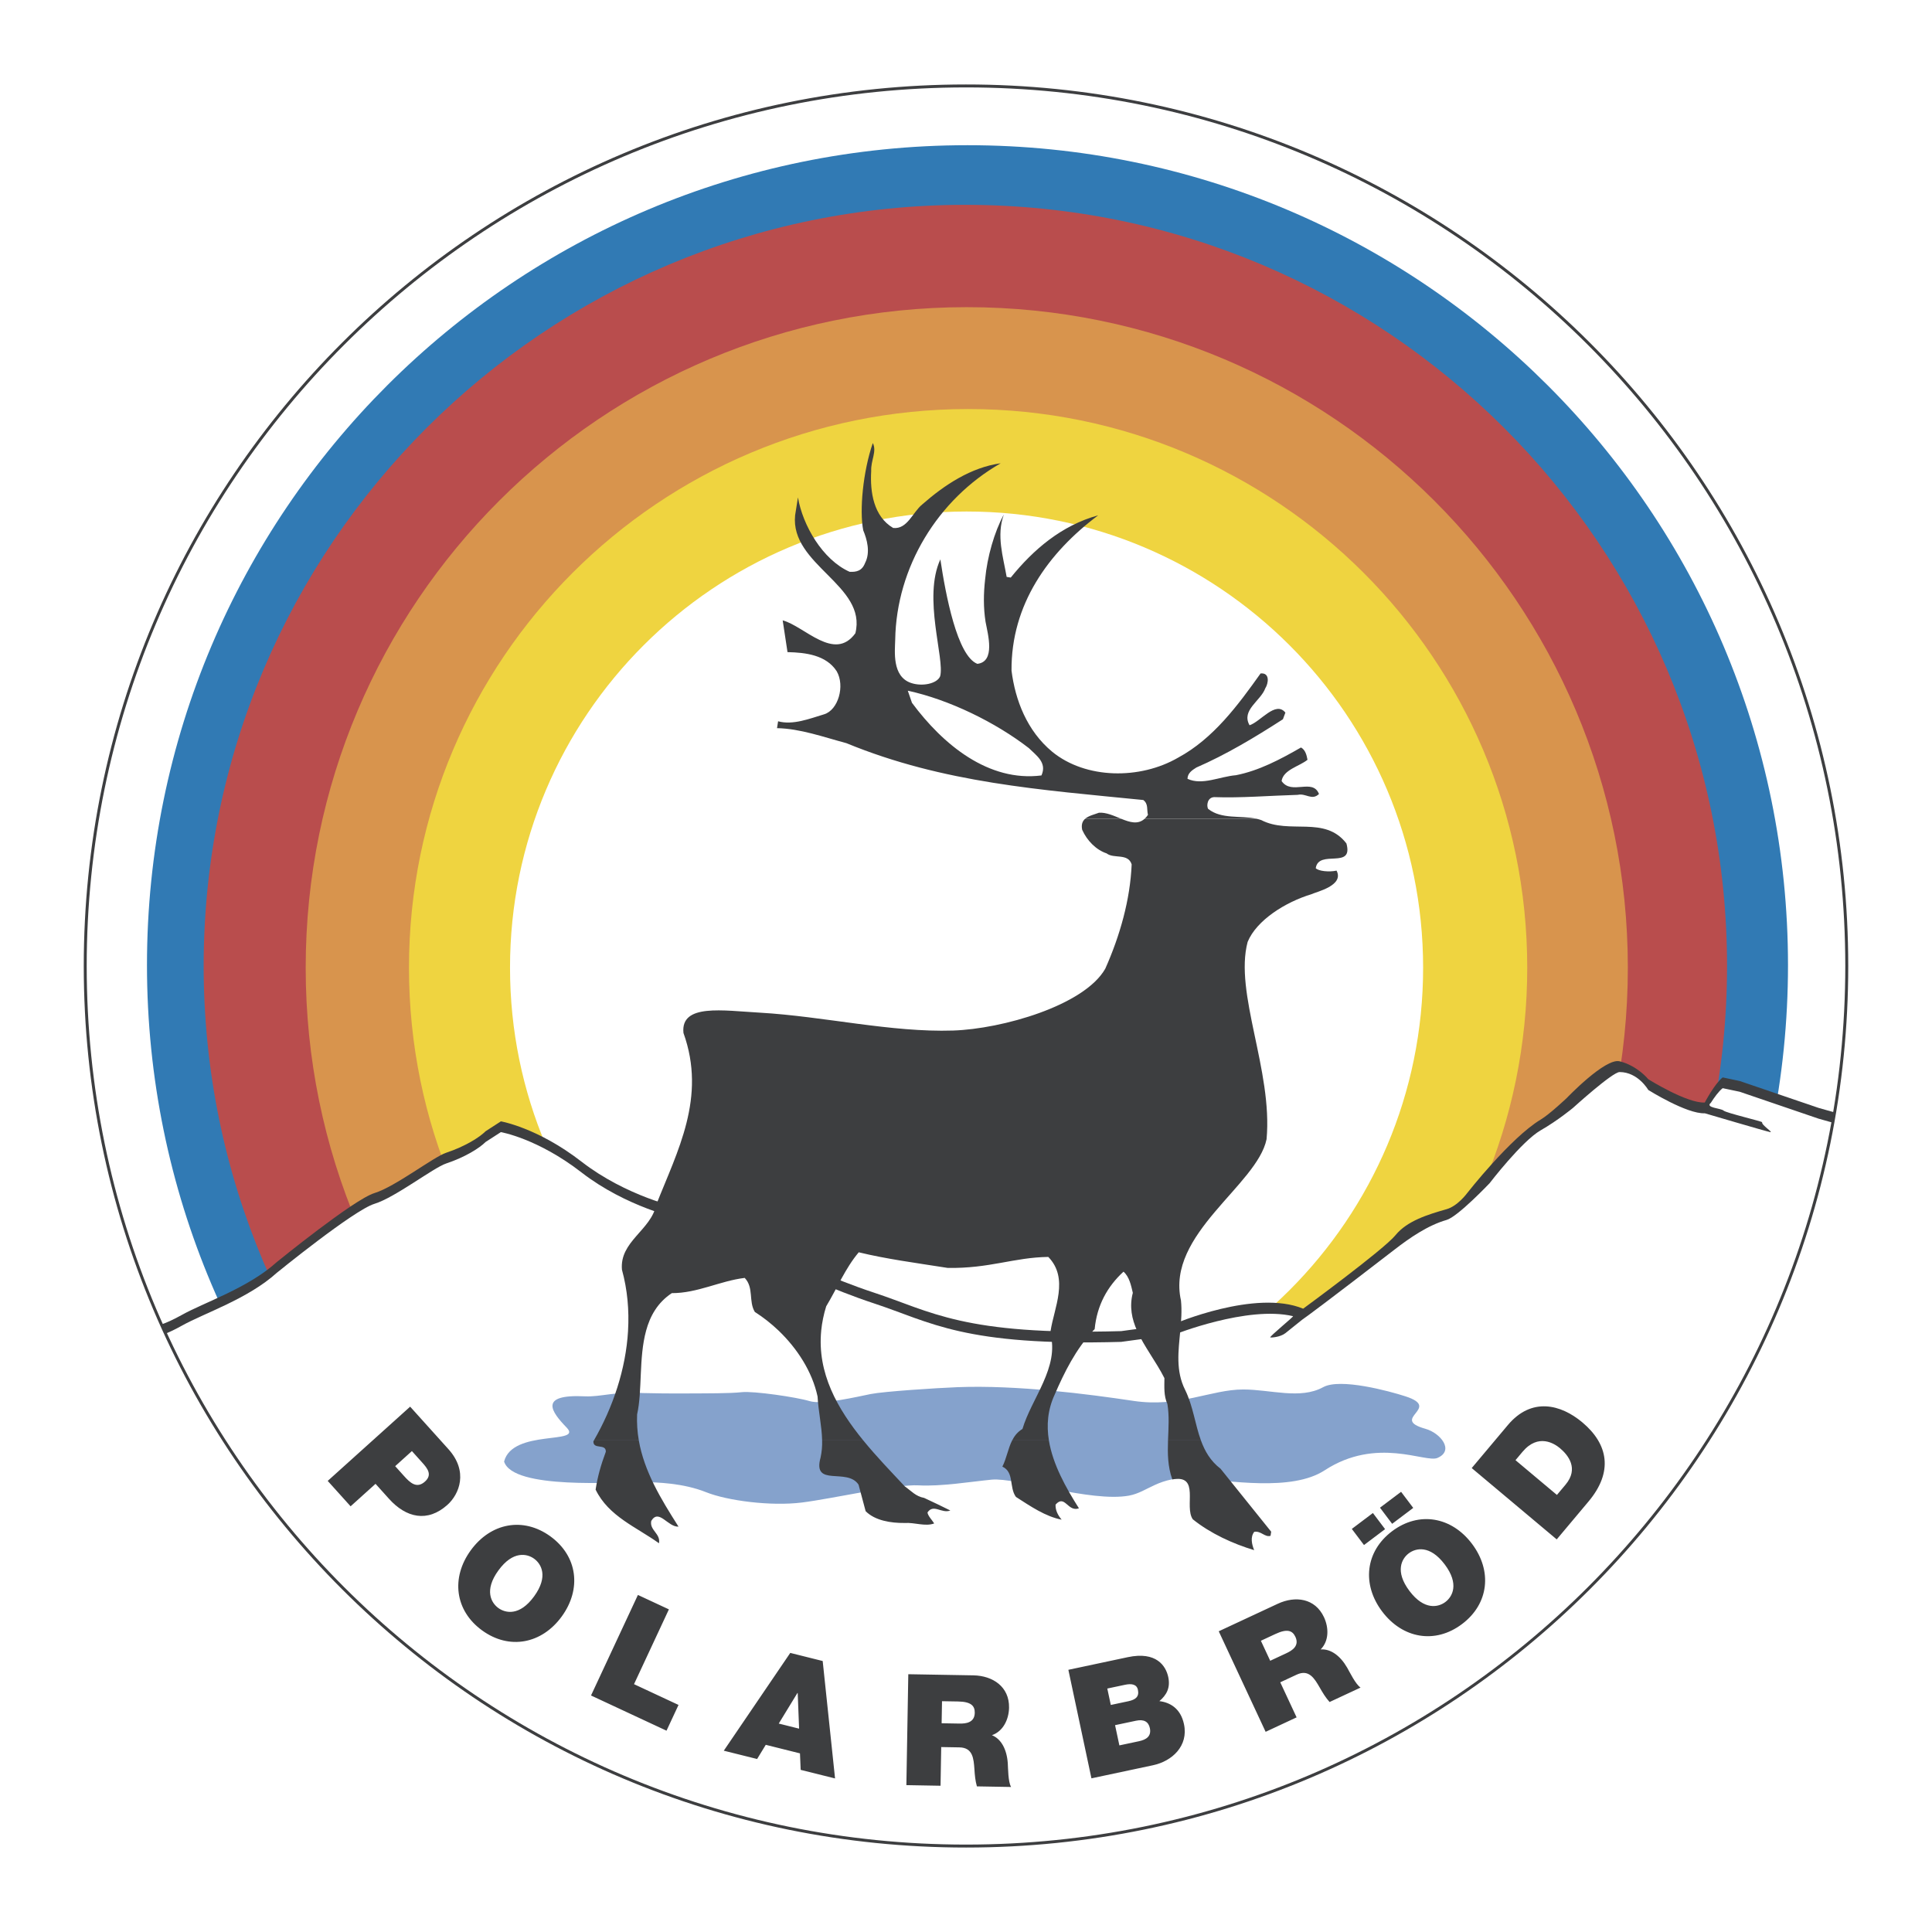 polarbröd（极地面包）logo0